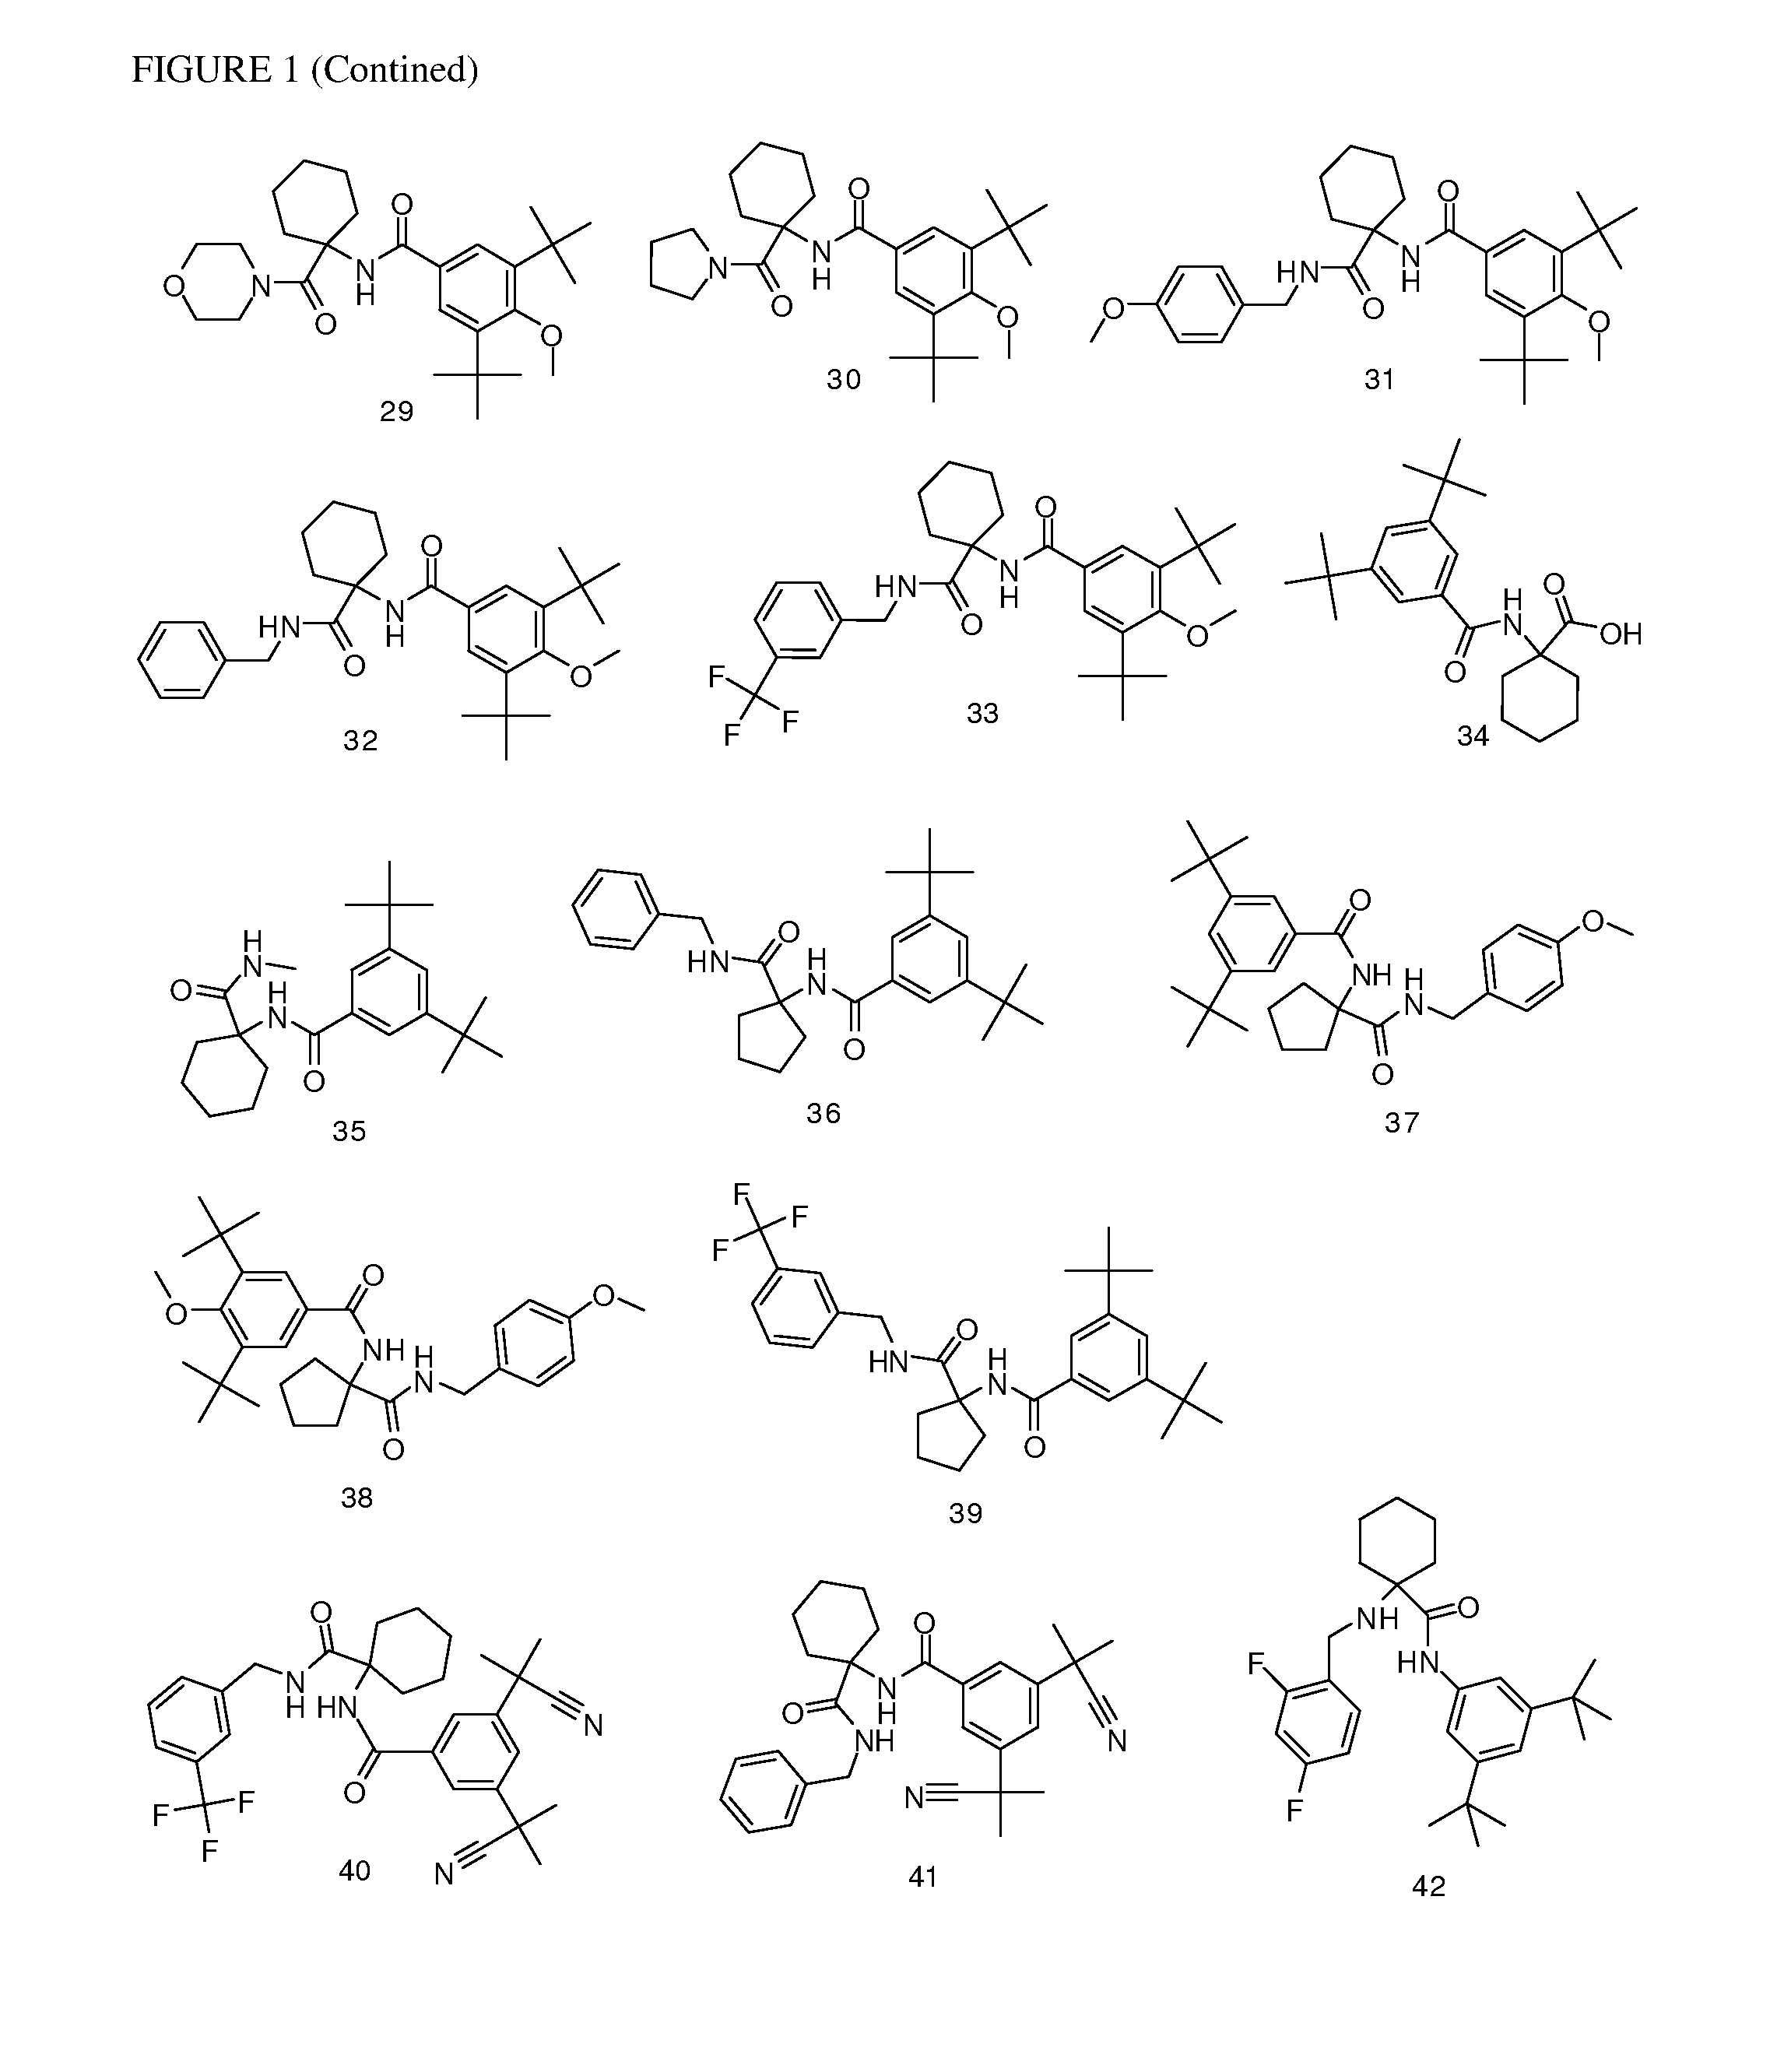 Cyclylamine derivatives as calcium channel blockers